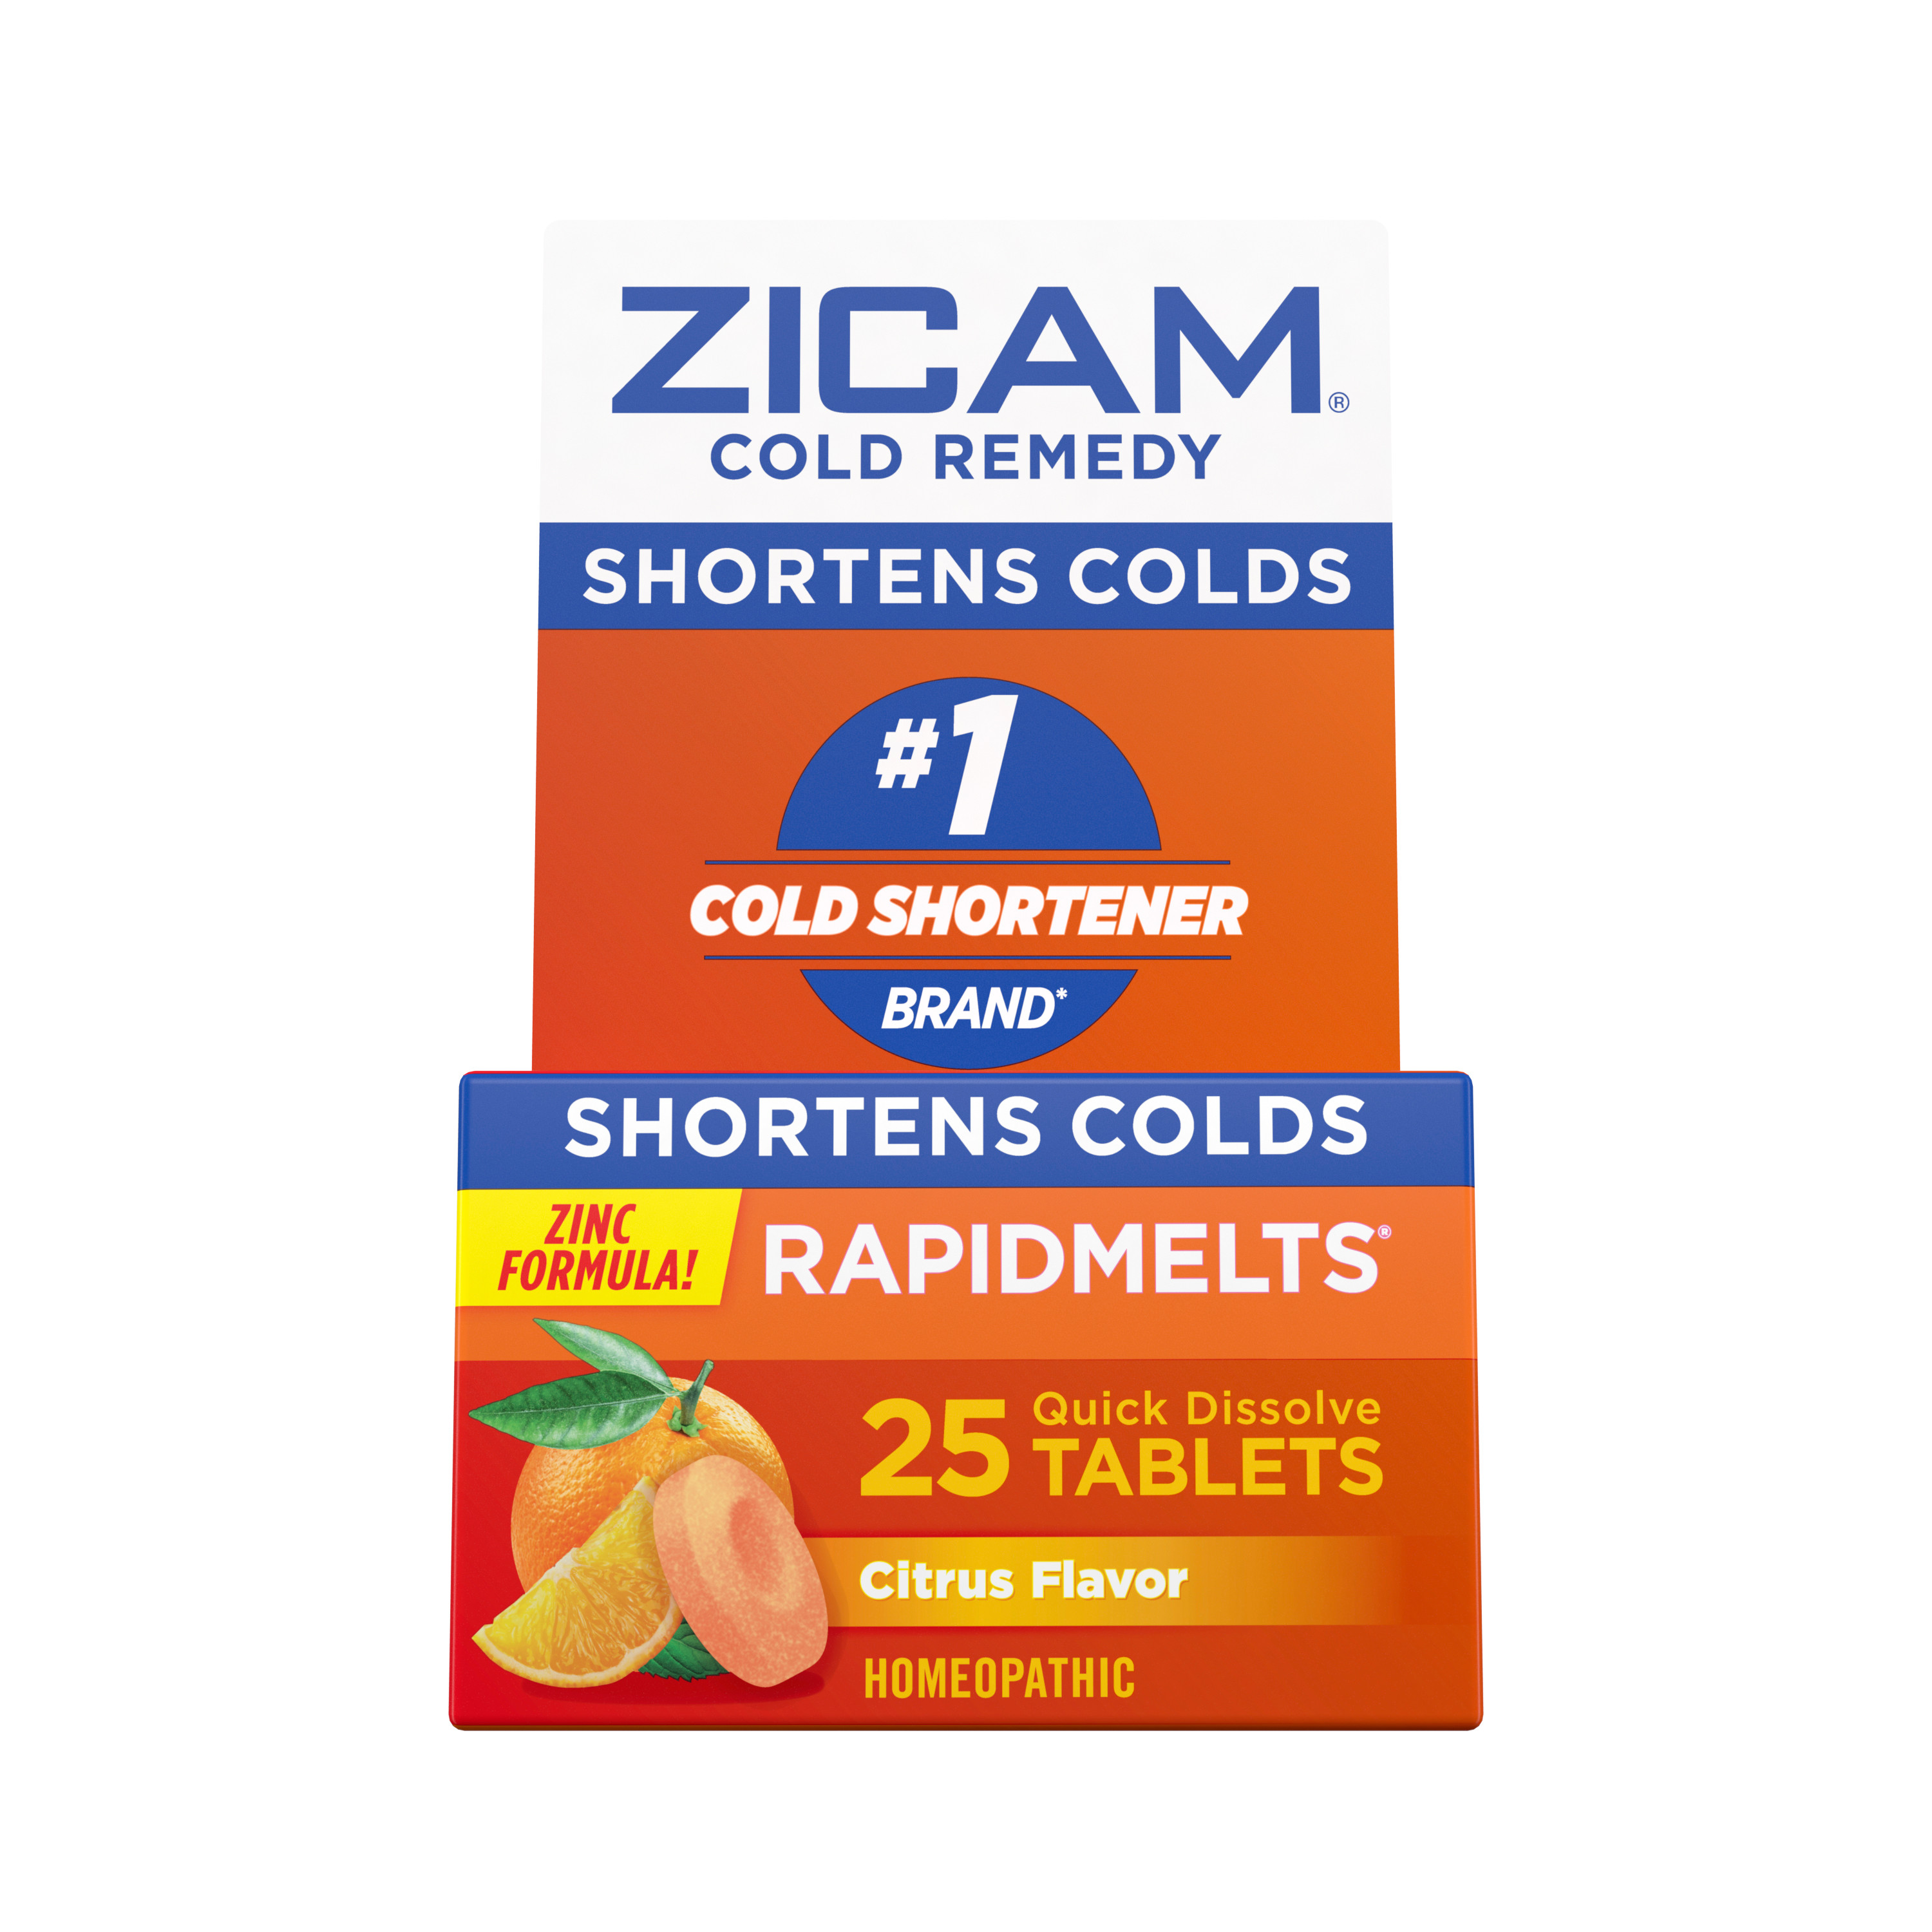 Zicam Cold Remedy Zinc RapidMelts, Citrus Flavor, Homeopathic Cold Shortening Medicine, 25 Count - image 1 of 11